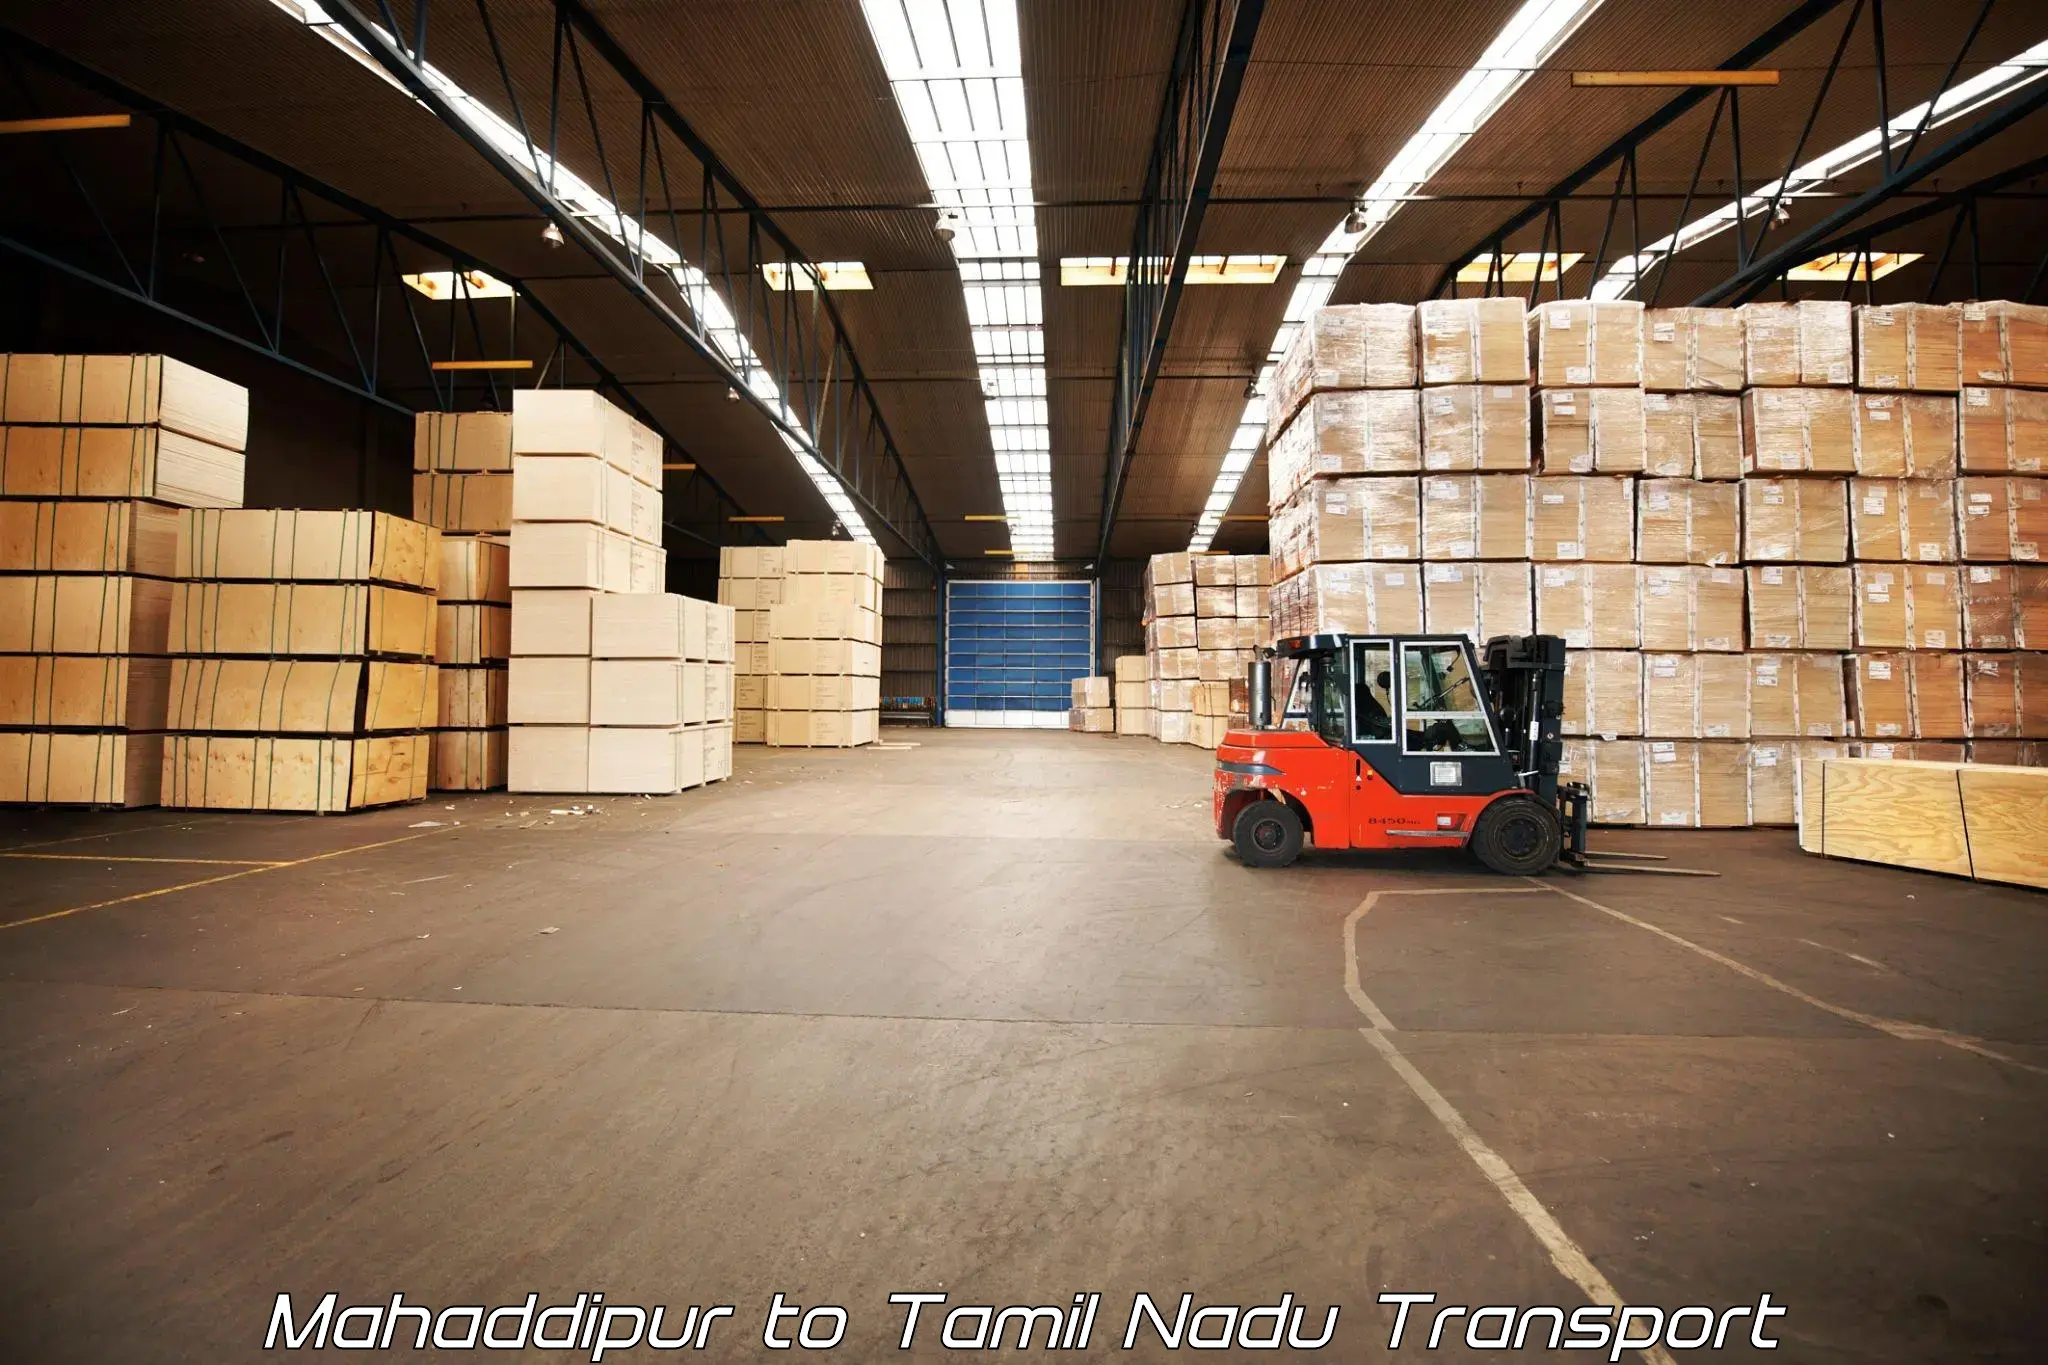 Delivery service Mahaddipur to Thirukkattupalli